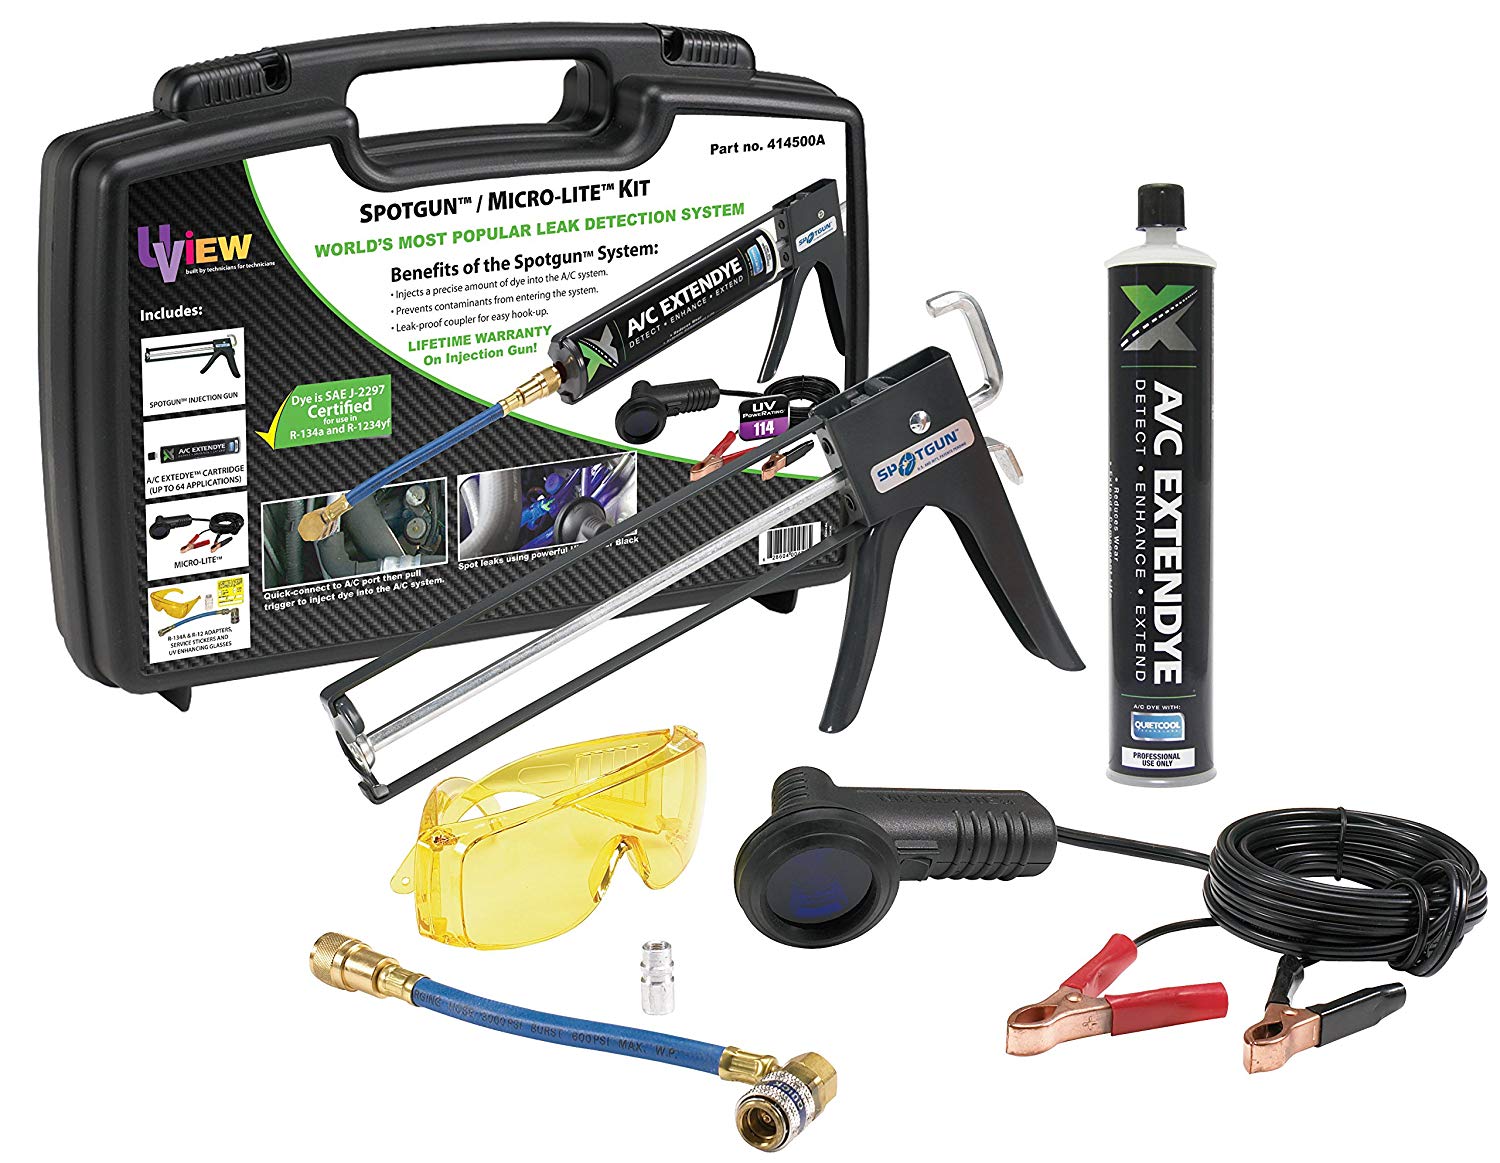 UView 414500A A/C ExtenDye Leak Detection Kit - MPR Tools & Equipment